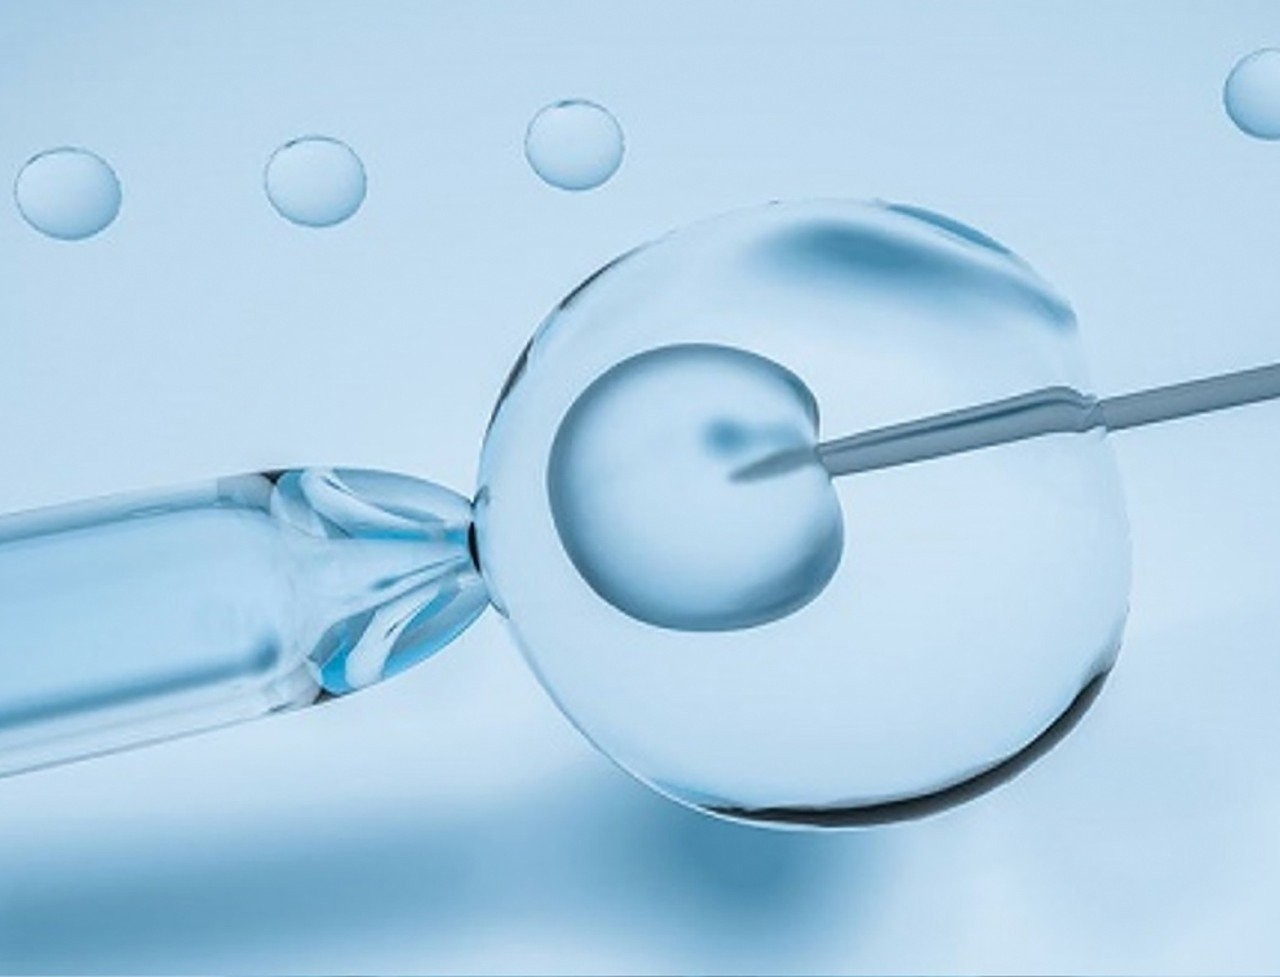 drvasilopoulos-in-vitro-fertilization-research-b.jpg